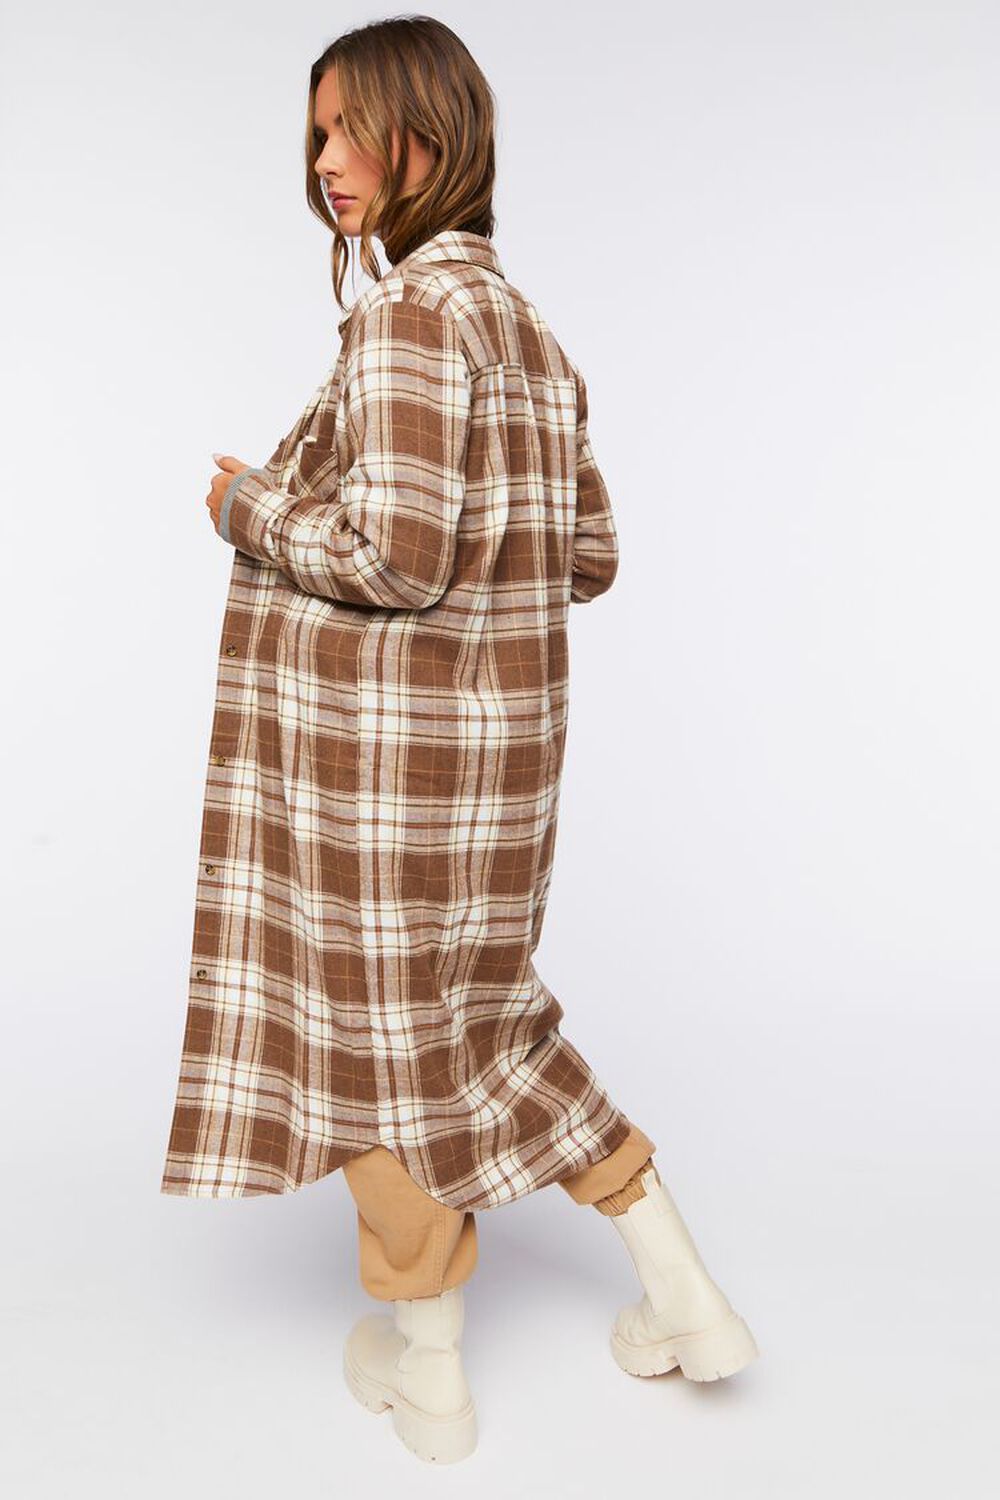 BROWN/MULTI Plaid Flannel Longline Tunic, image 3